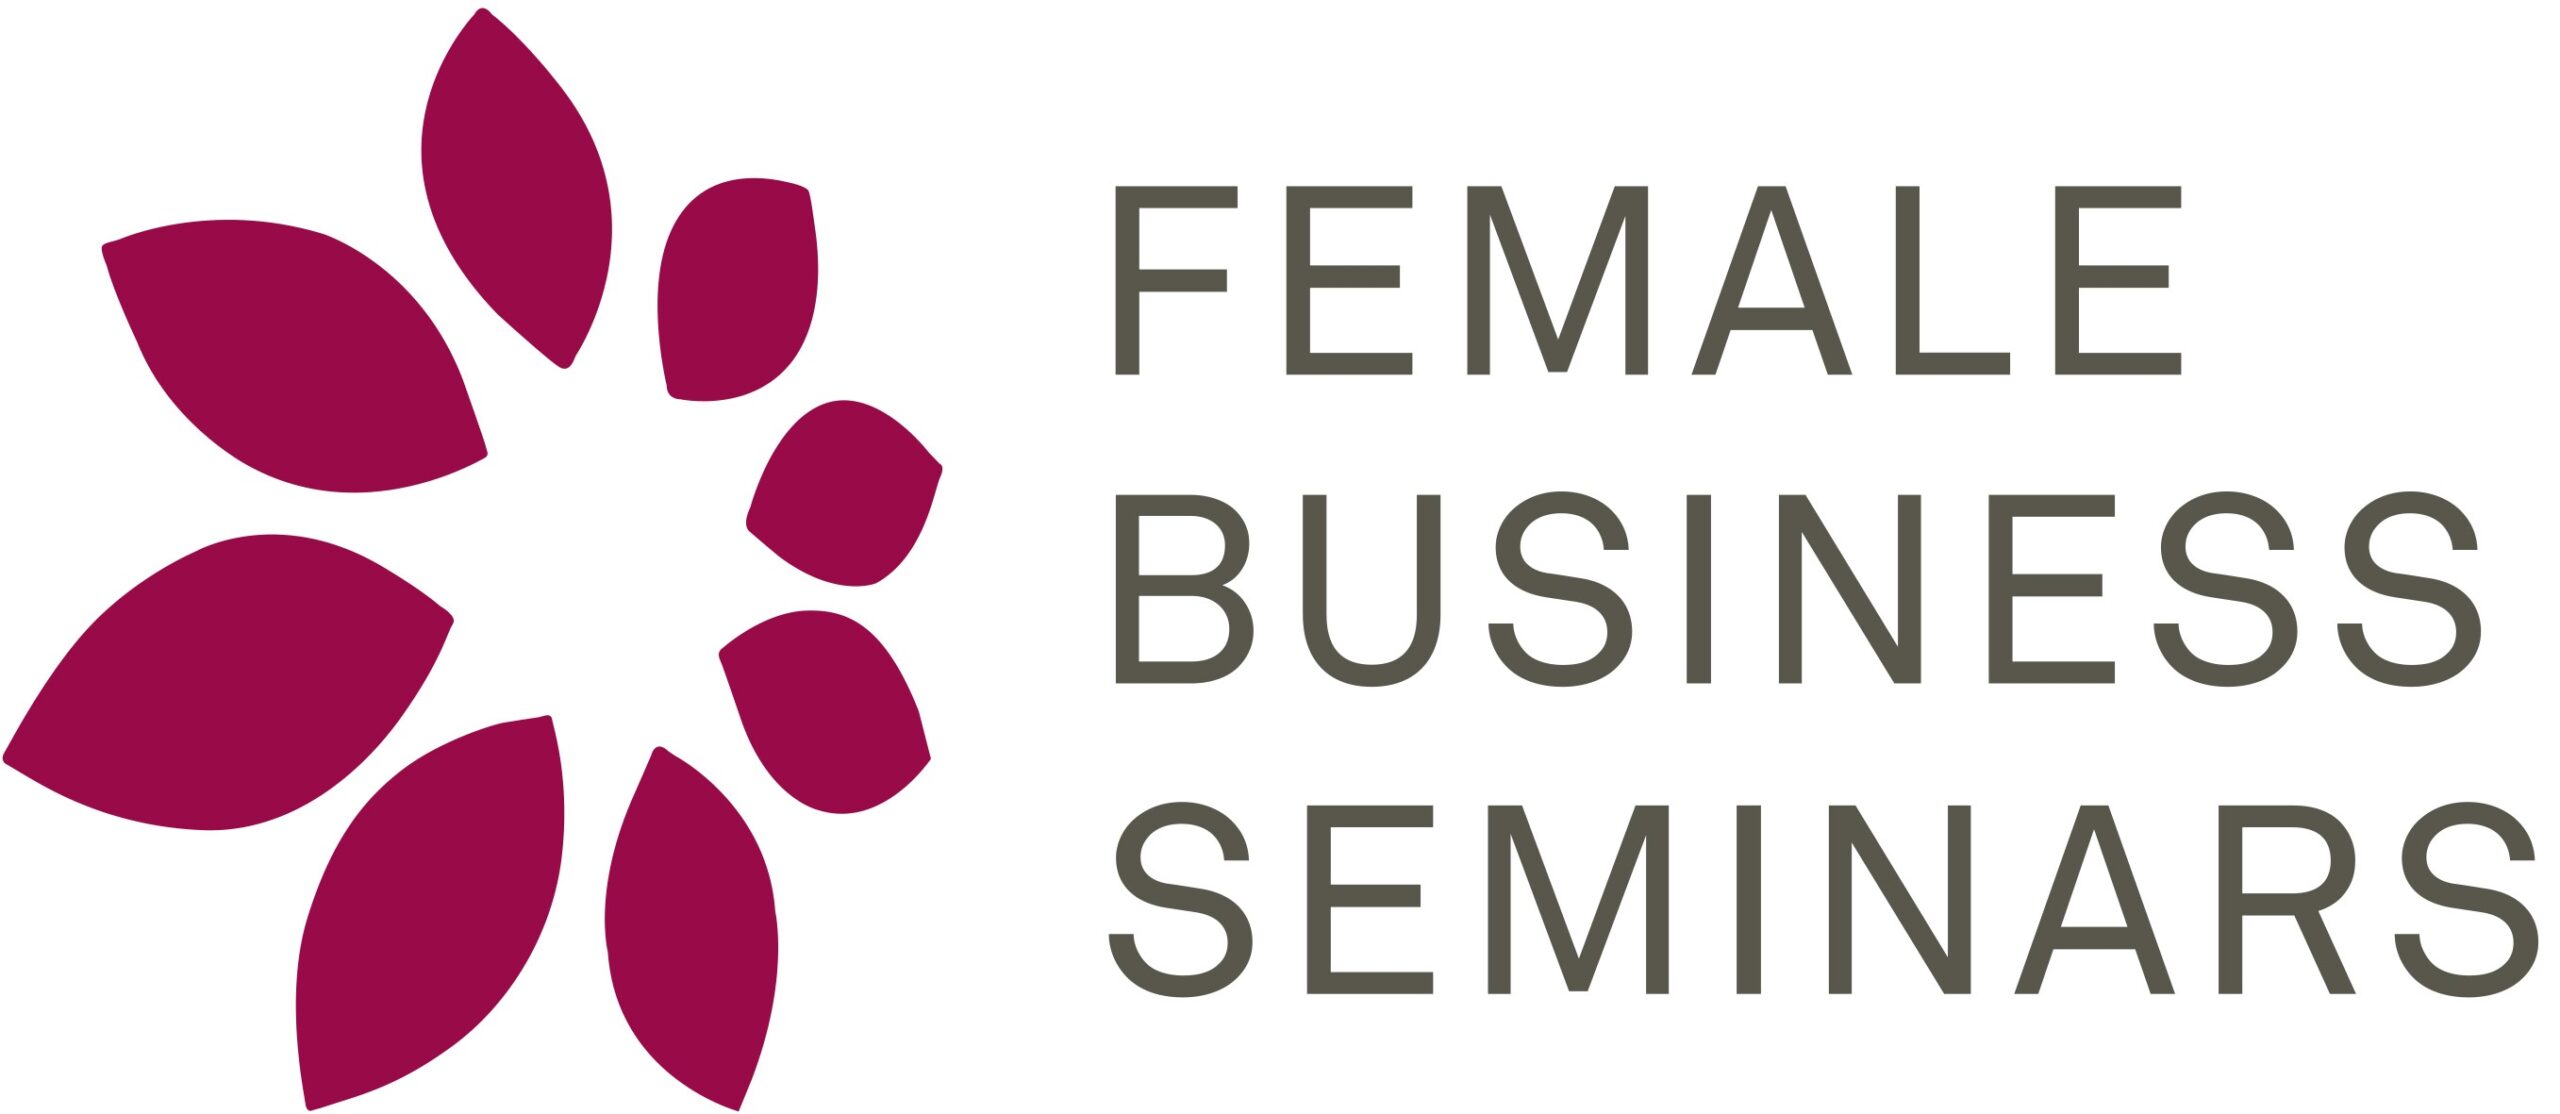 Female Business Seminars